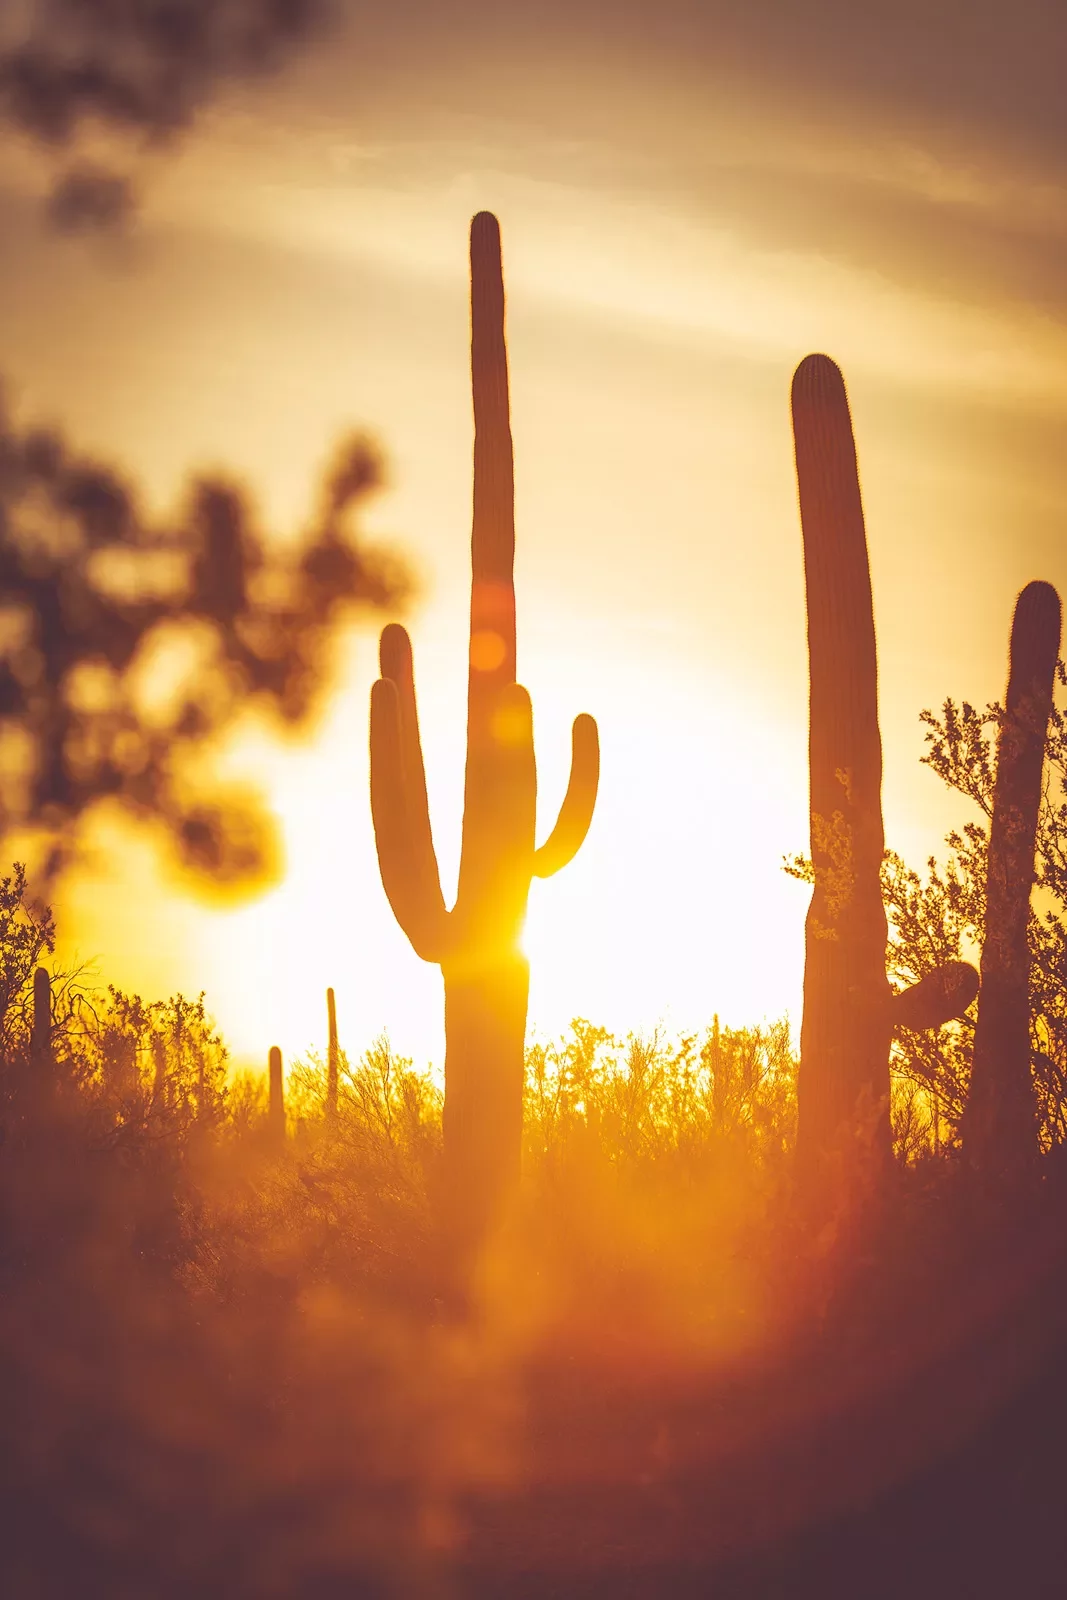 Cacti portrait at sunset